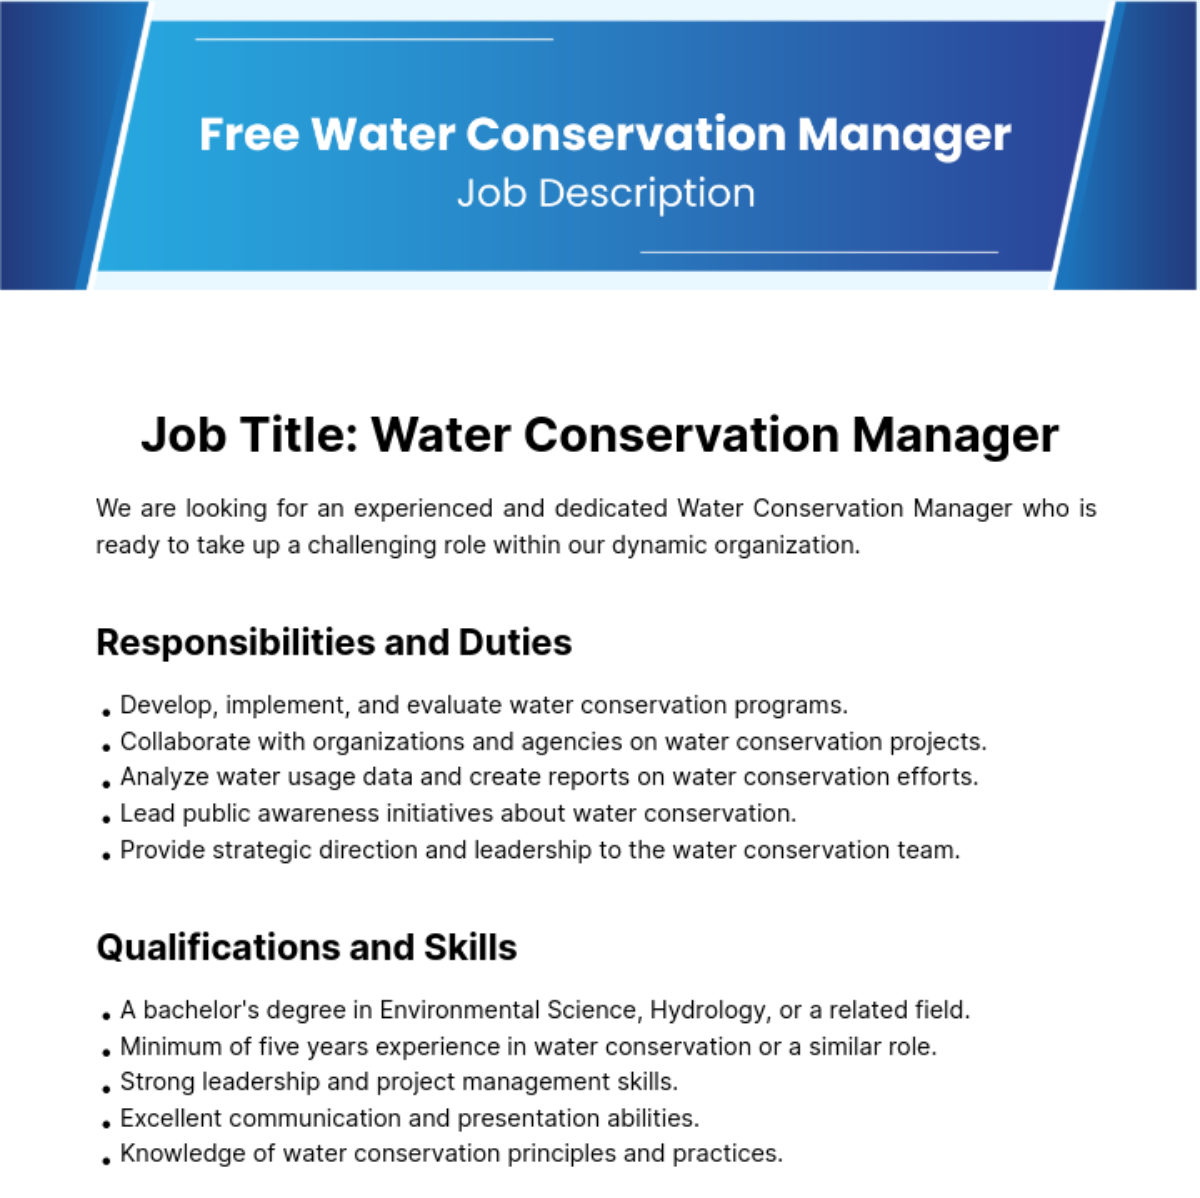 Water Conservation Manager Job Description Template